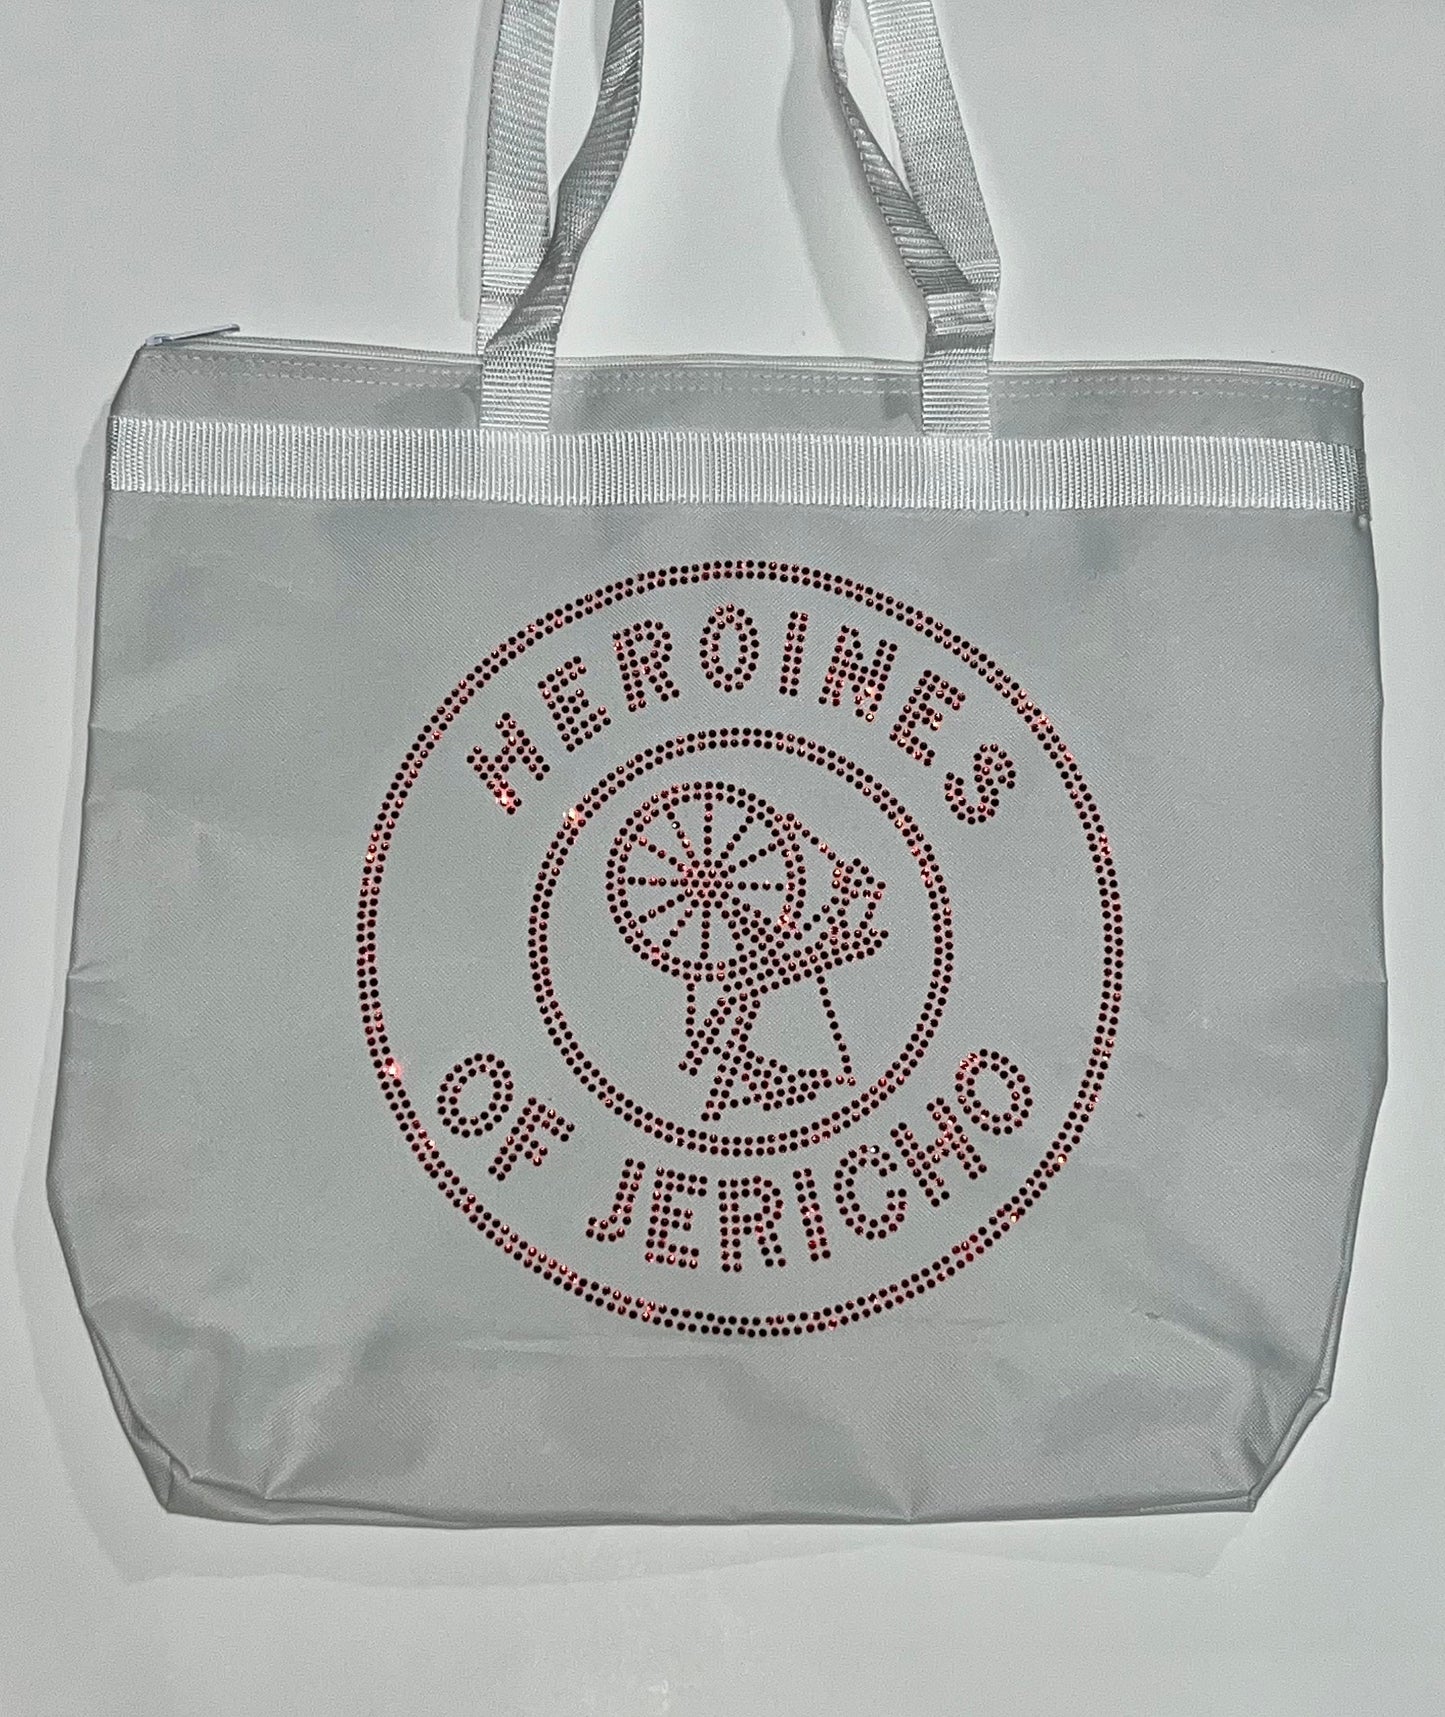 Heroines of Jericho HOJ large tote bag with logo both wheel design.